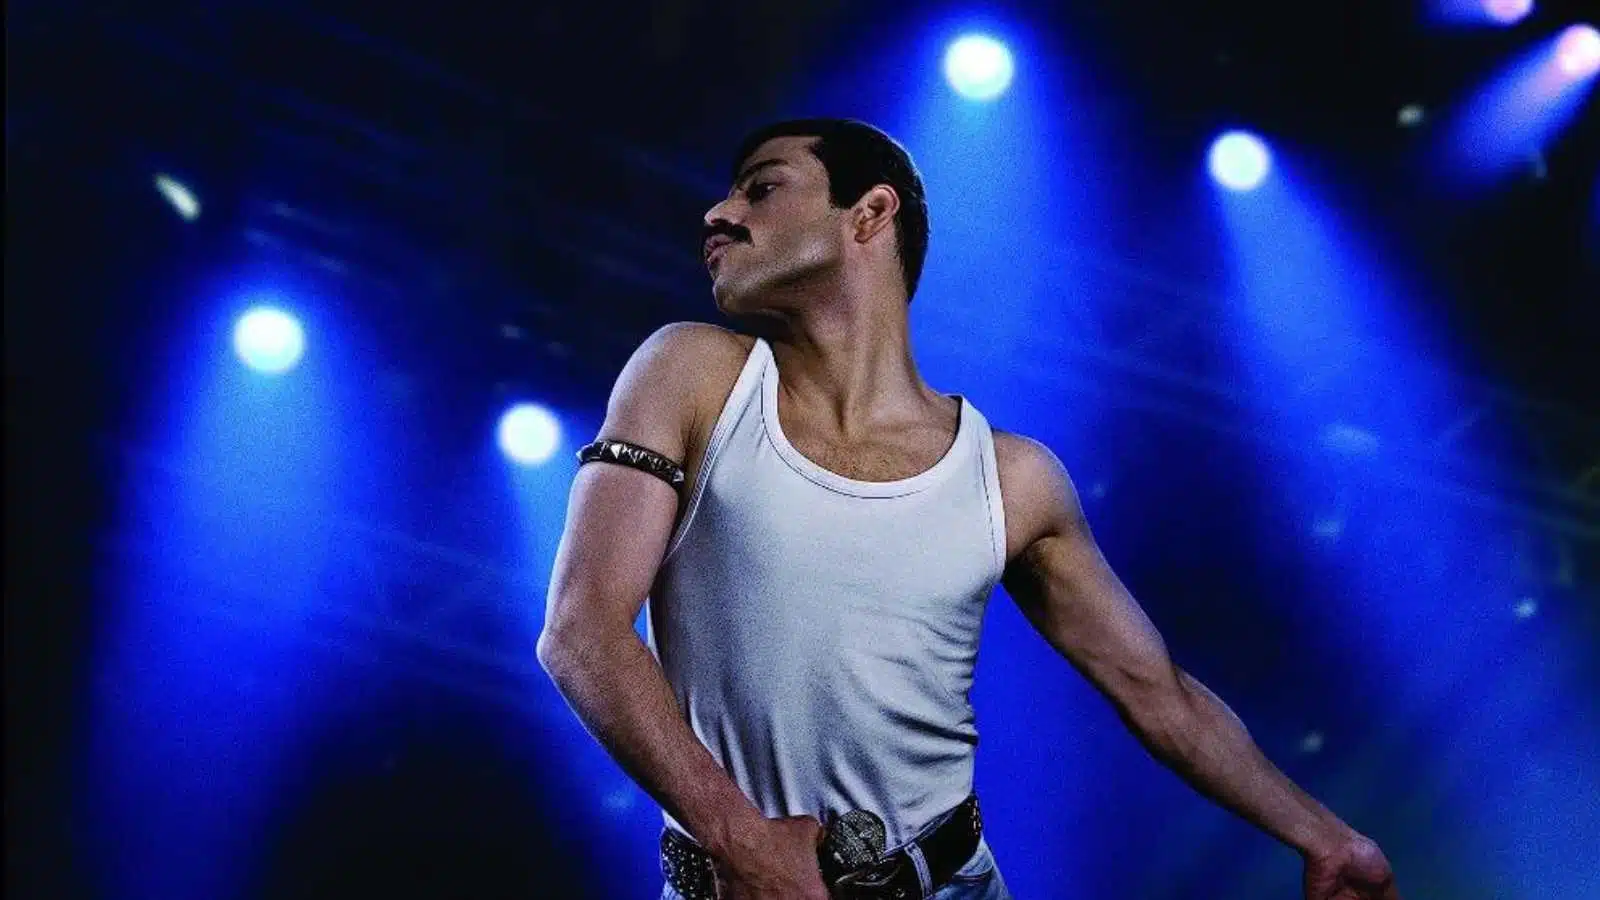 Rami Malek in Bohemian Rhapsody (2018)